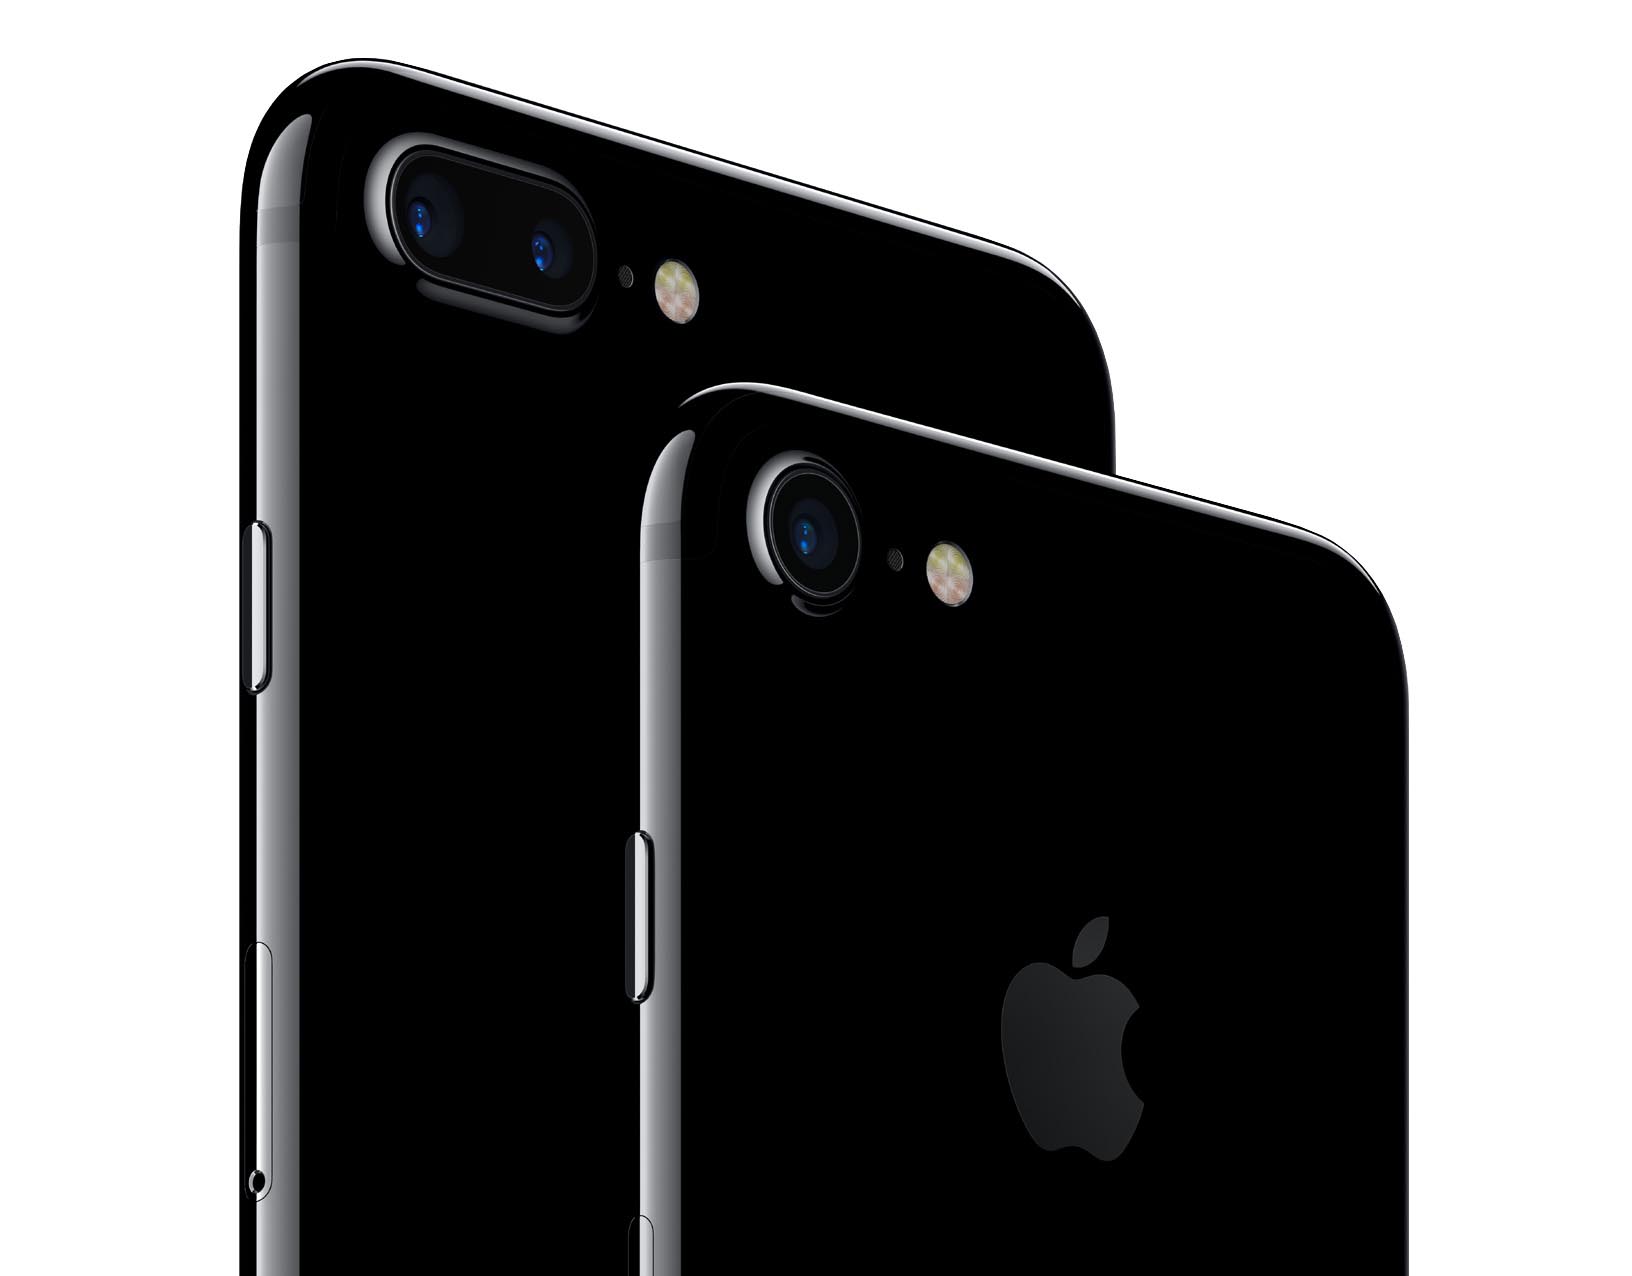 iPhone 7 Matte and Jet Black Models